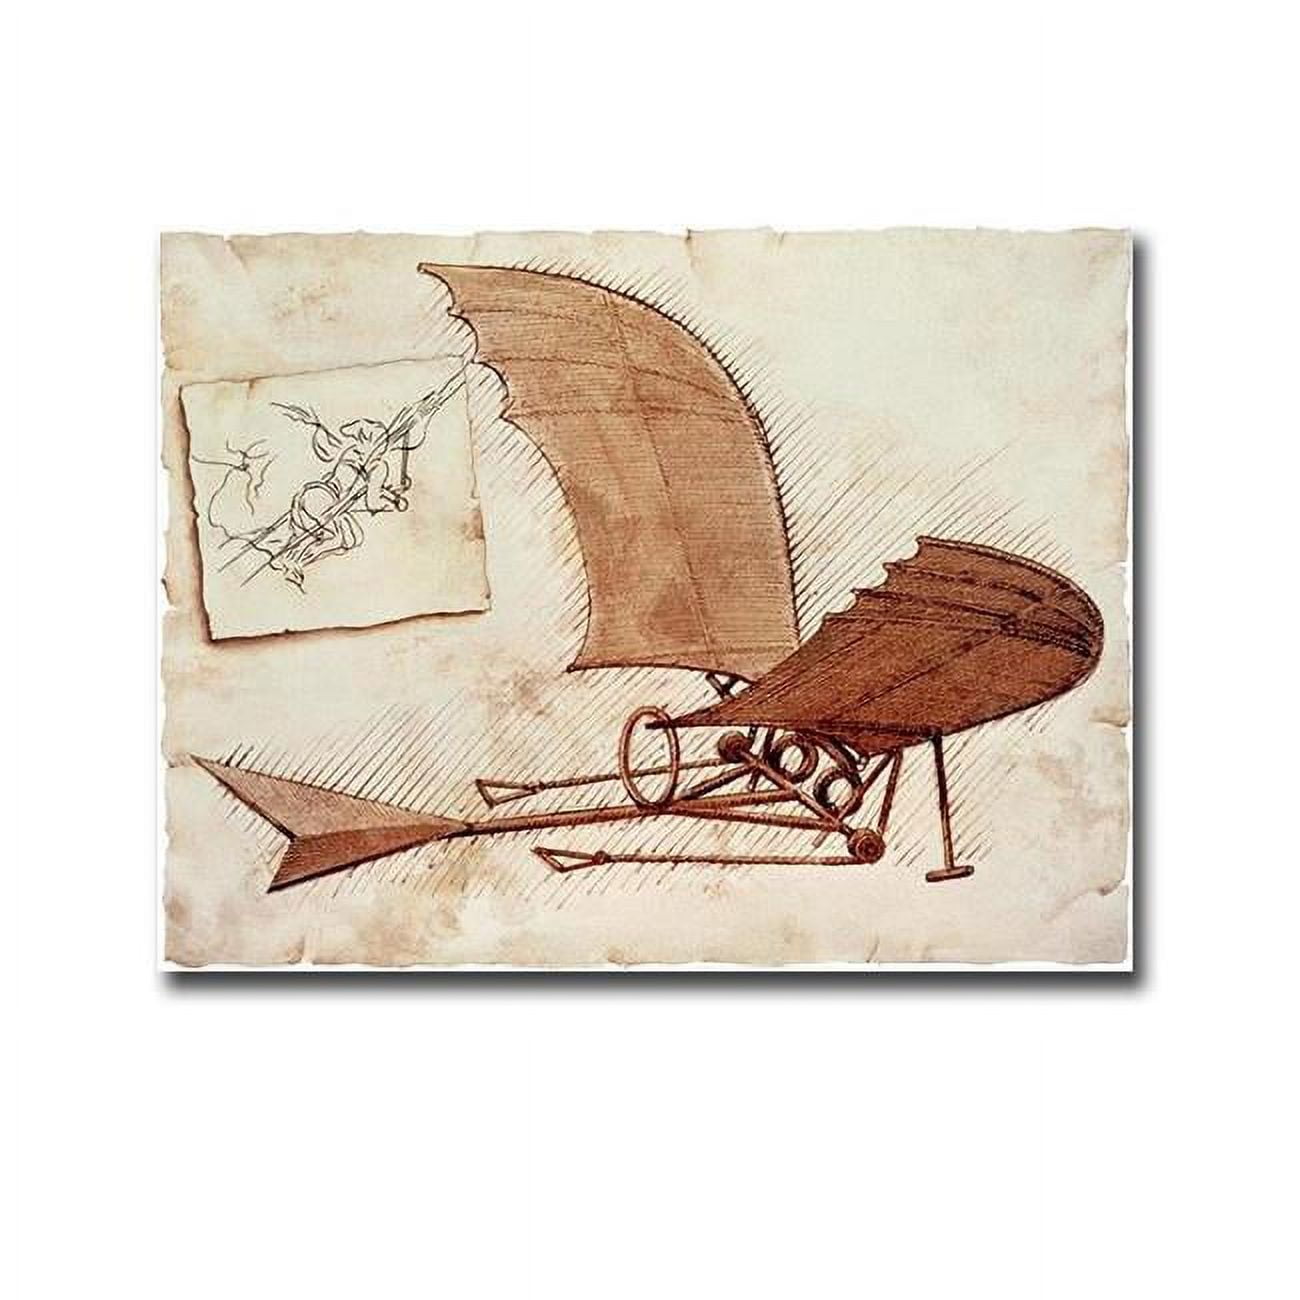 1216356bg Flying Machine By Leonardo Da Vinci Premium Gallery-wrapped Canvas Giclee Art - 12 X 16 X 1.5 In.